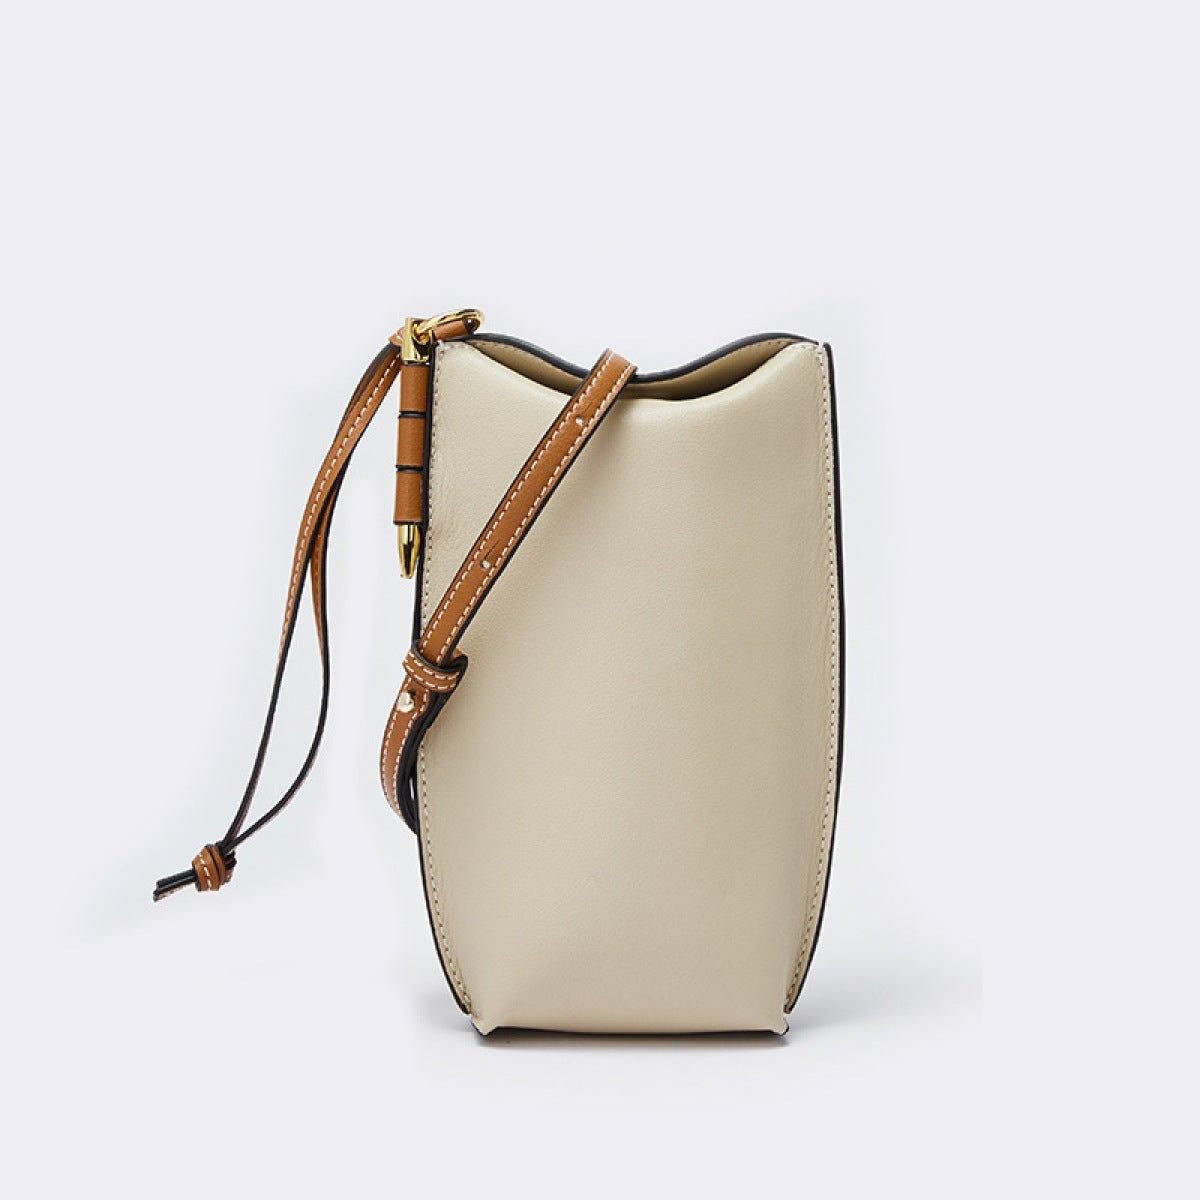 Retro Style Crossbody Bag With Adjustable Shoulder Straps